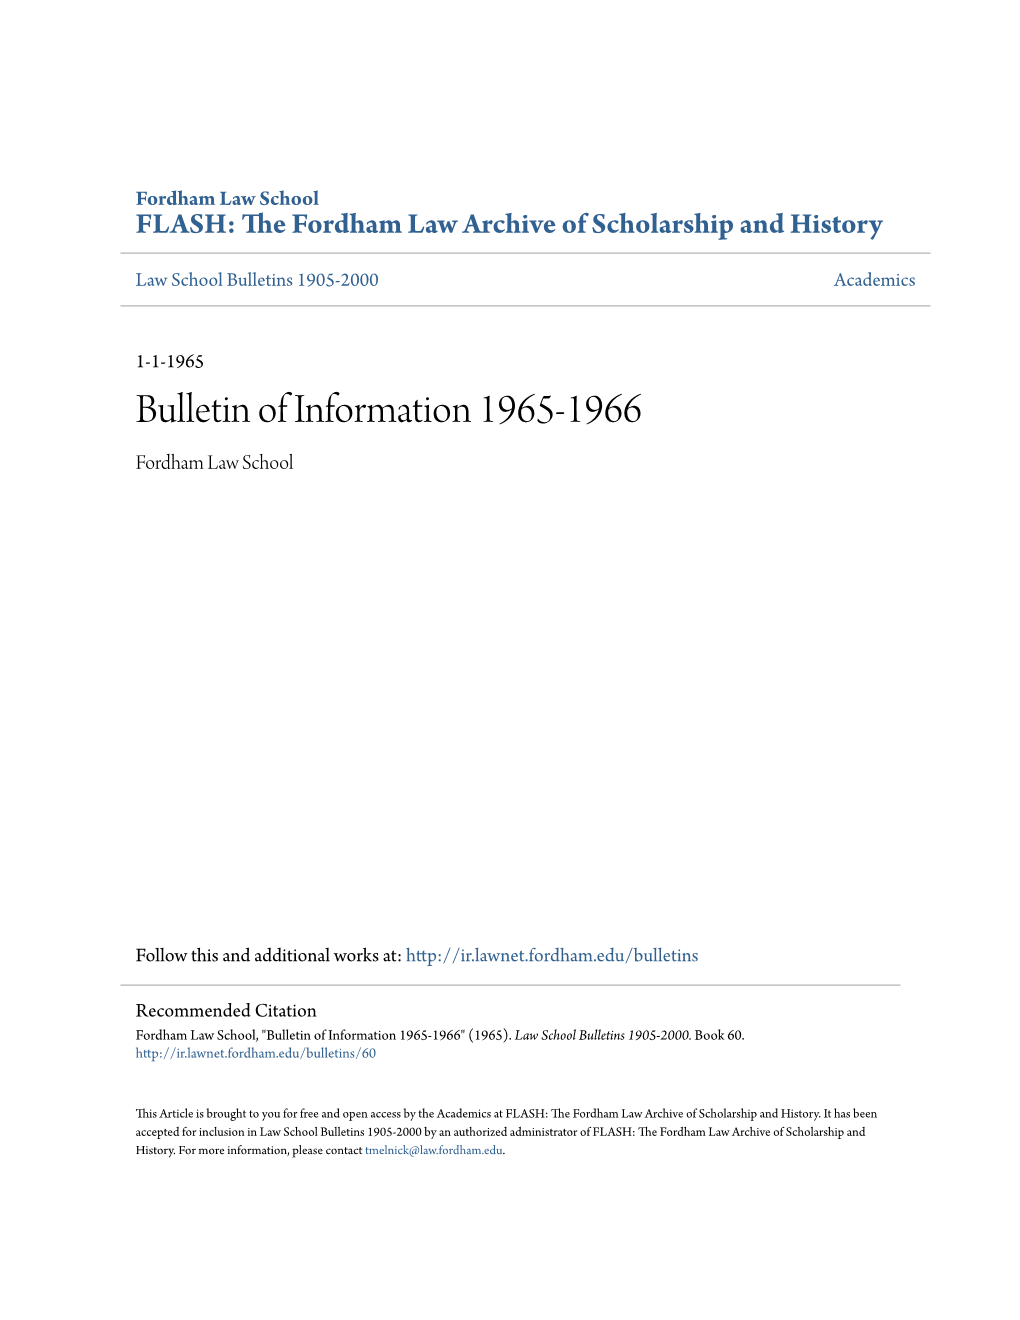 Bulletin of Information 1965-1966 Fordham Law School